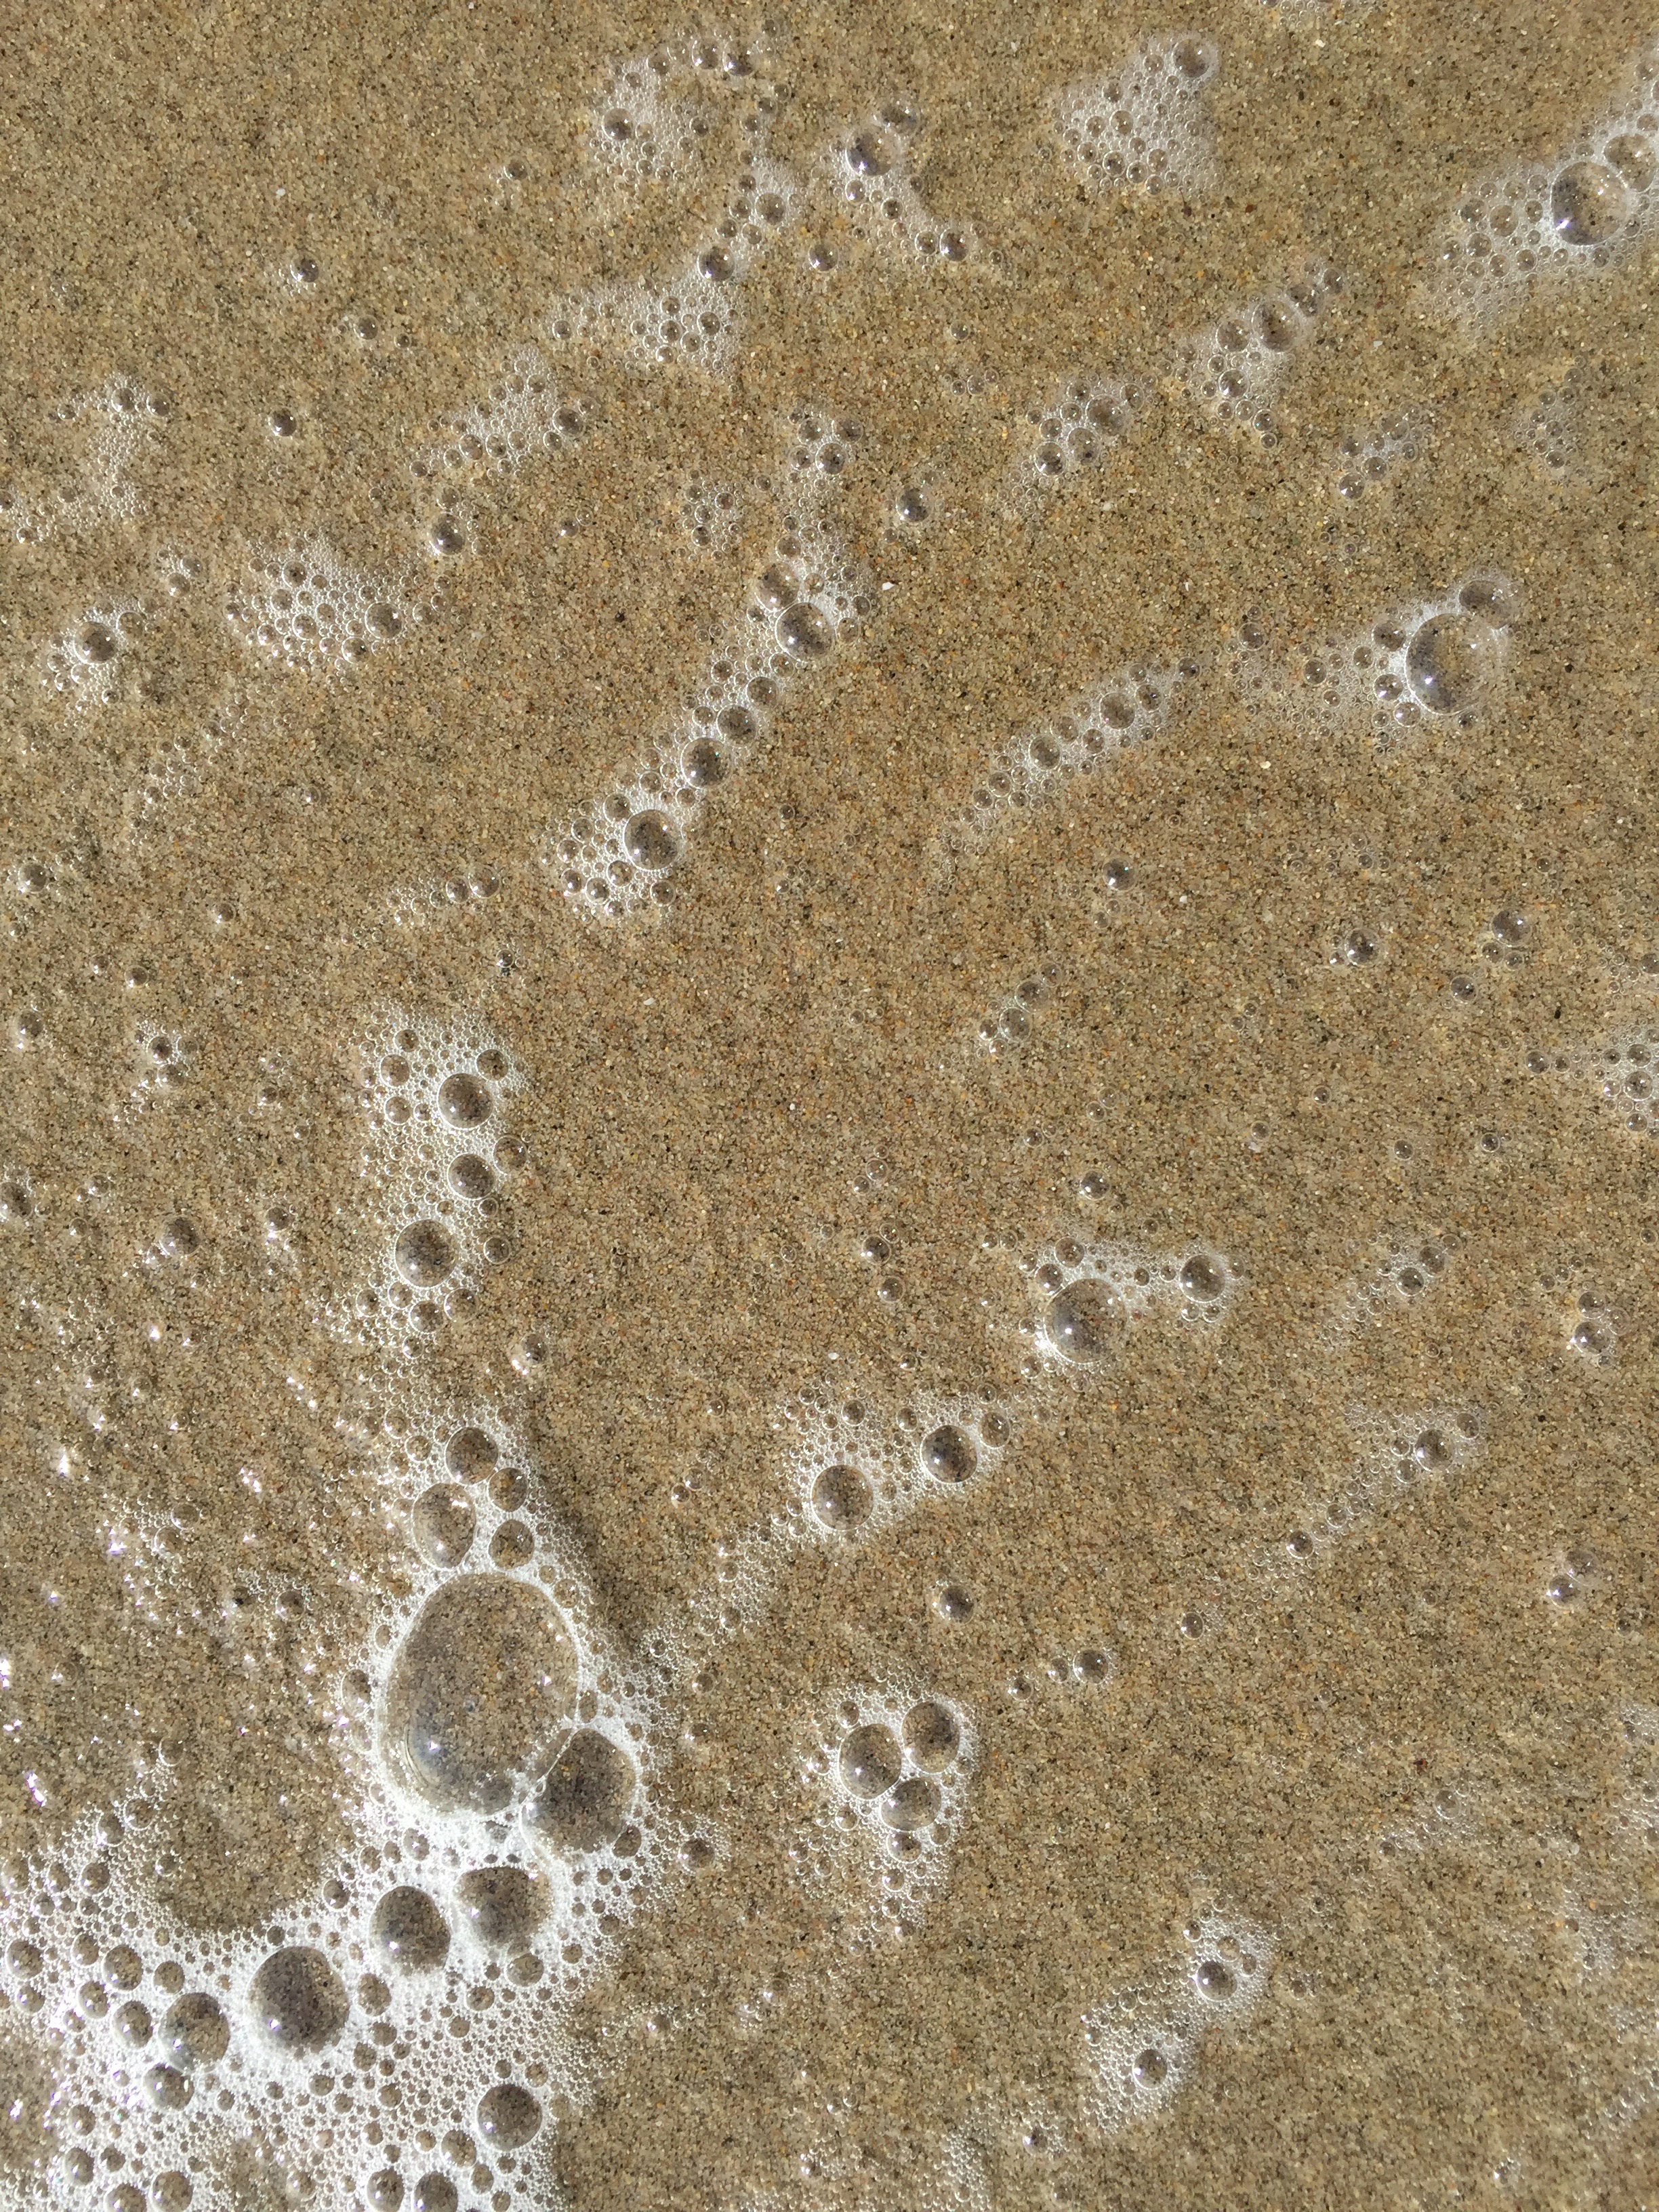 Glossy wet sand white sea foam texture Free Textures